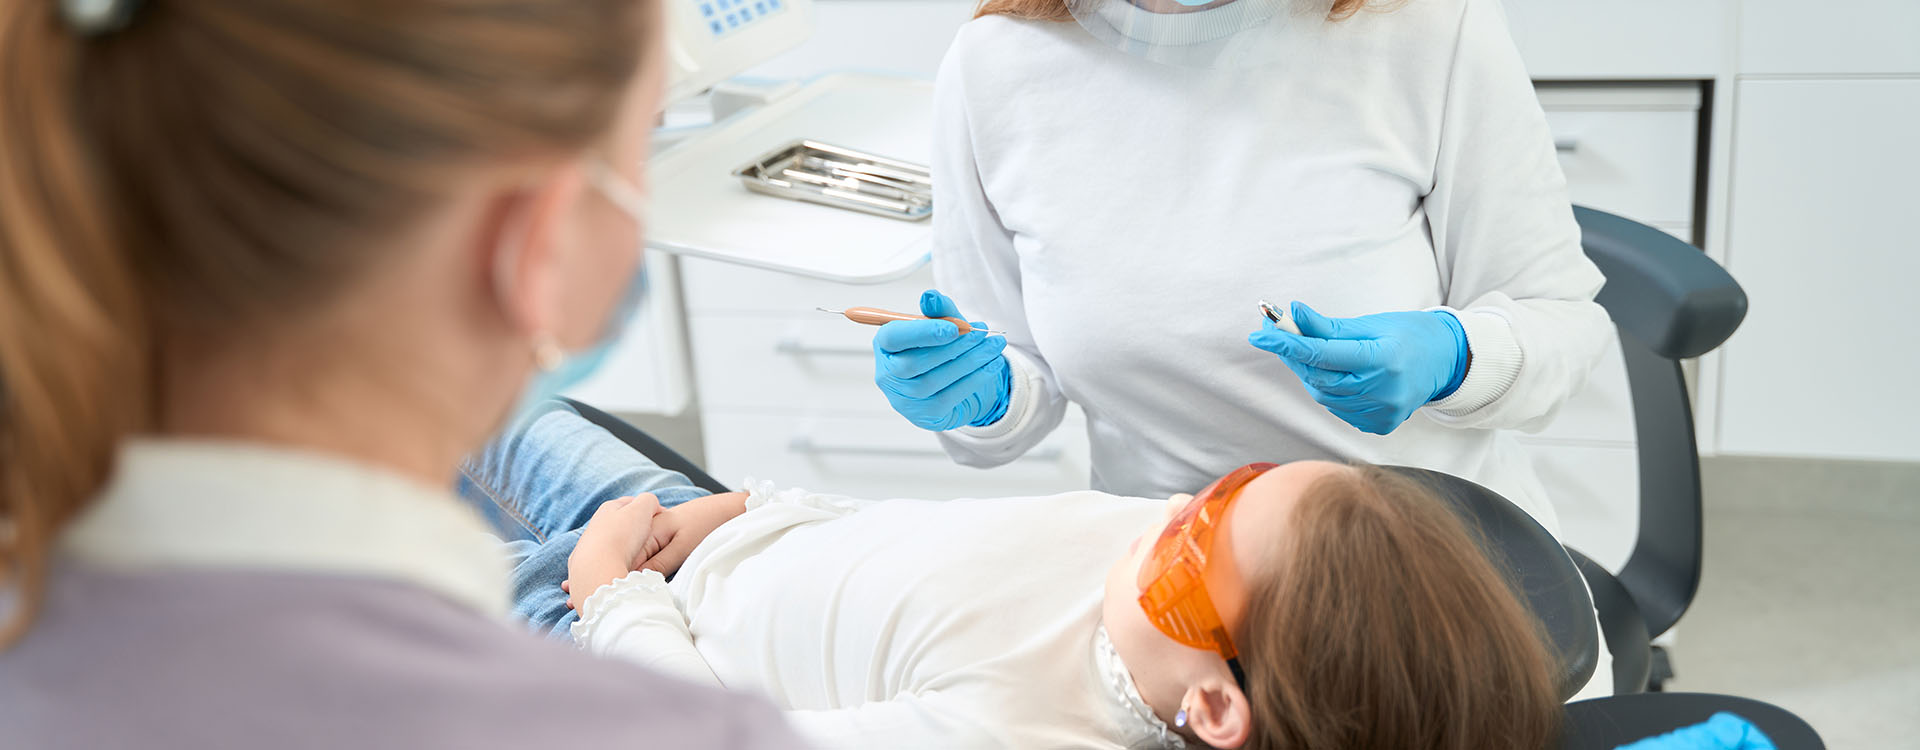 Clínica Dental Andrea Compte, tu Centro Odontológico especializado. Odontopediatría en Vinaròs. Dentista pediátrico que se prepara para examinar a la paciente.